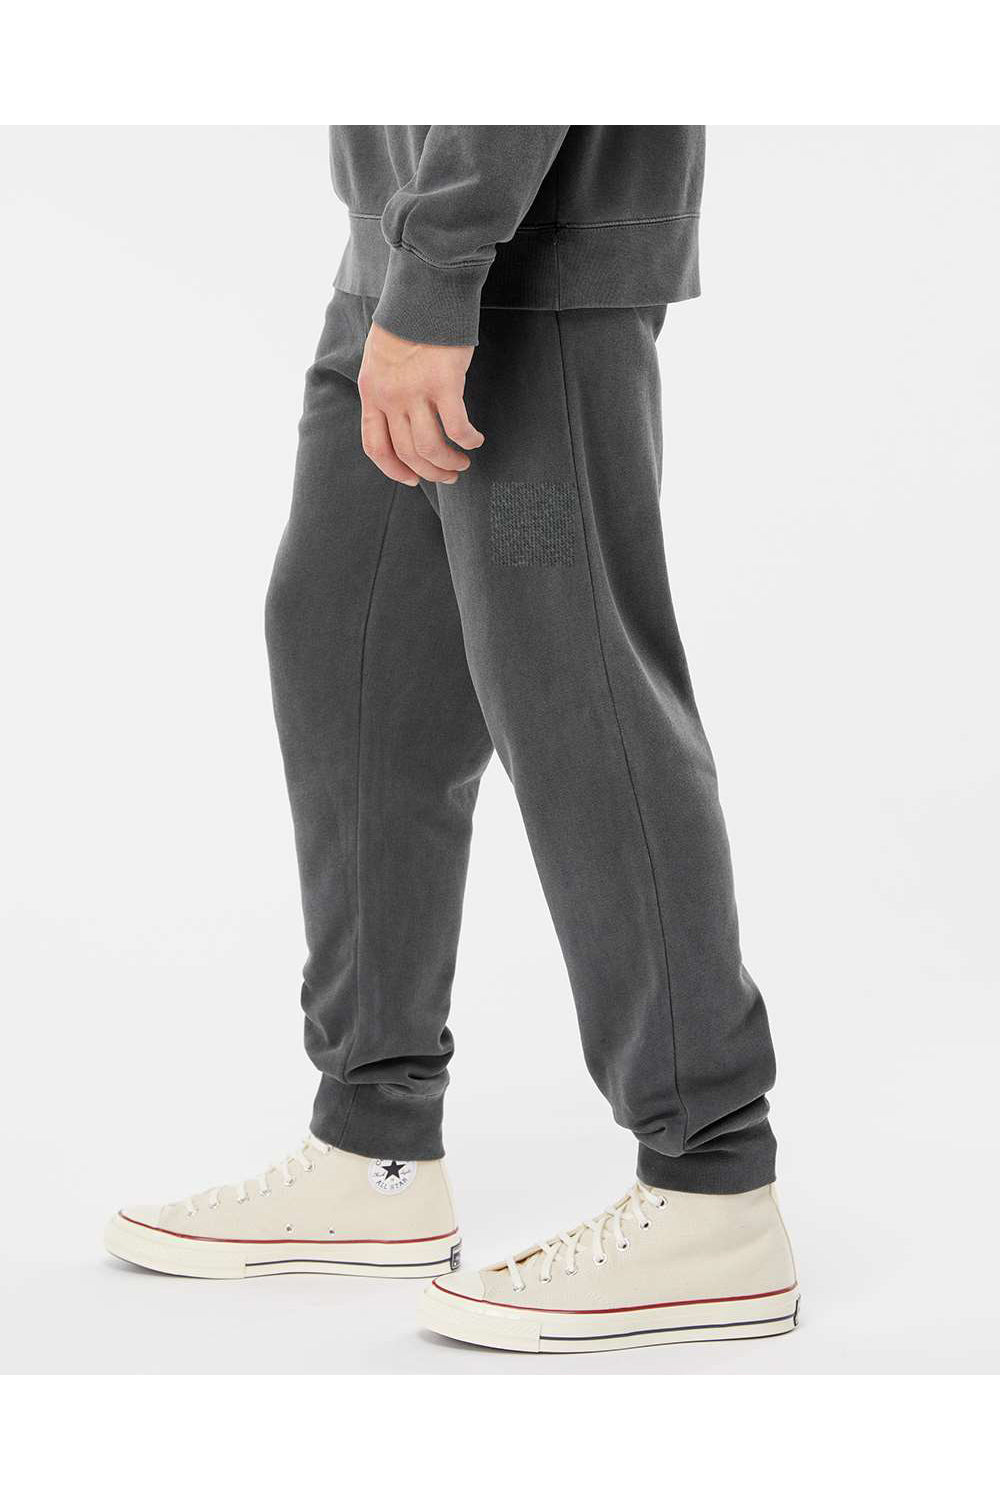 Independent Trading Co. PRM50PTPD Mens Pigment Dyed Fleece Sweatpants w/ Pockets Black Model Side